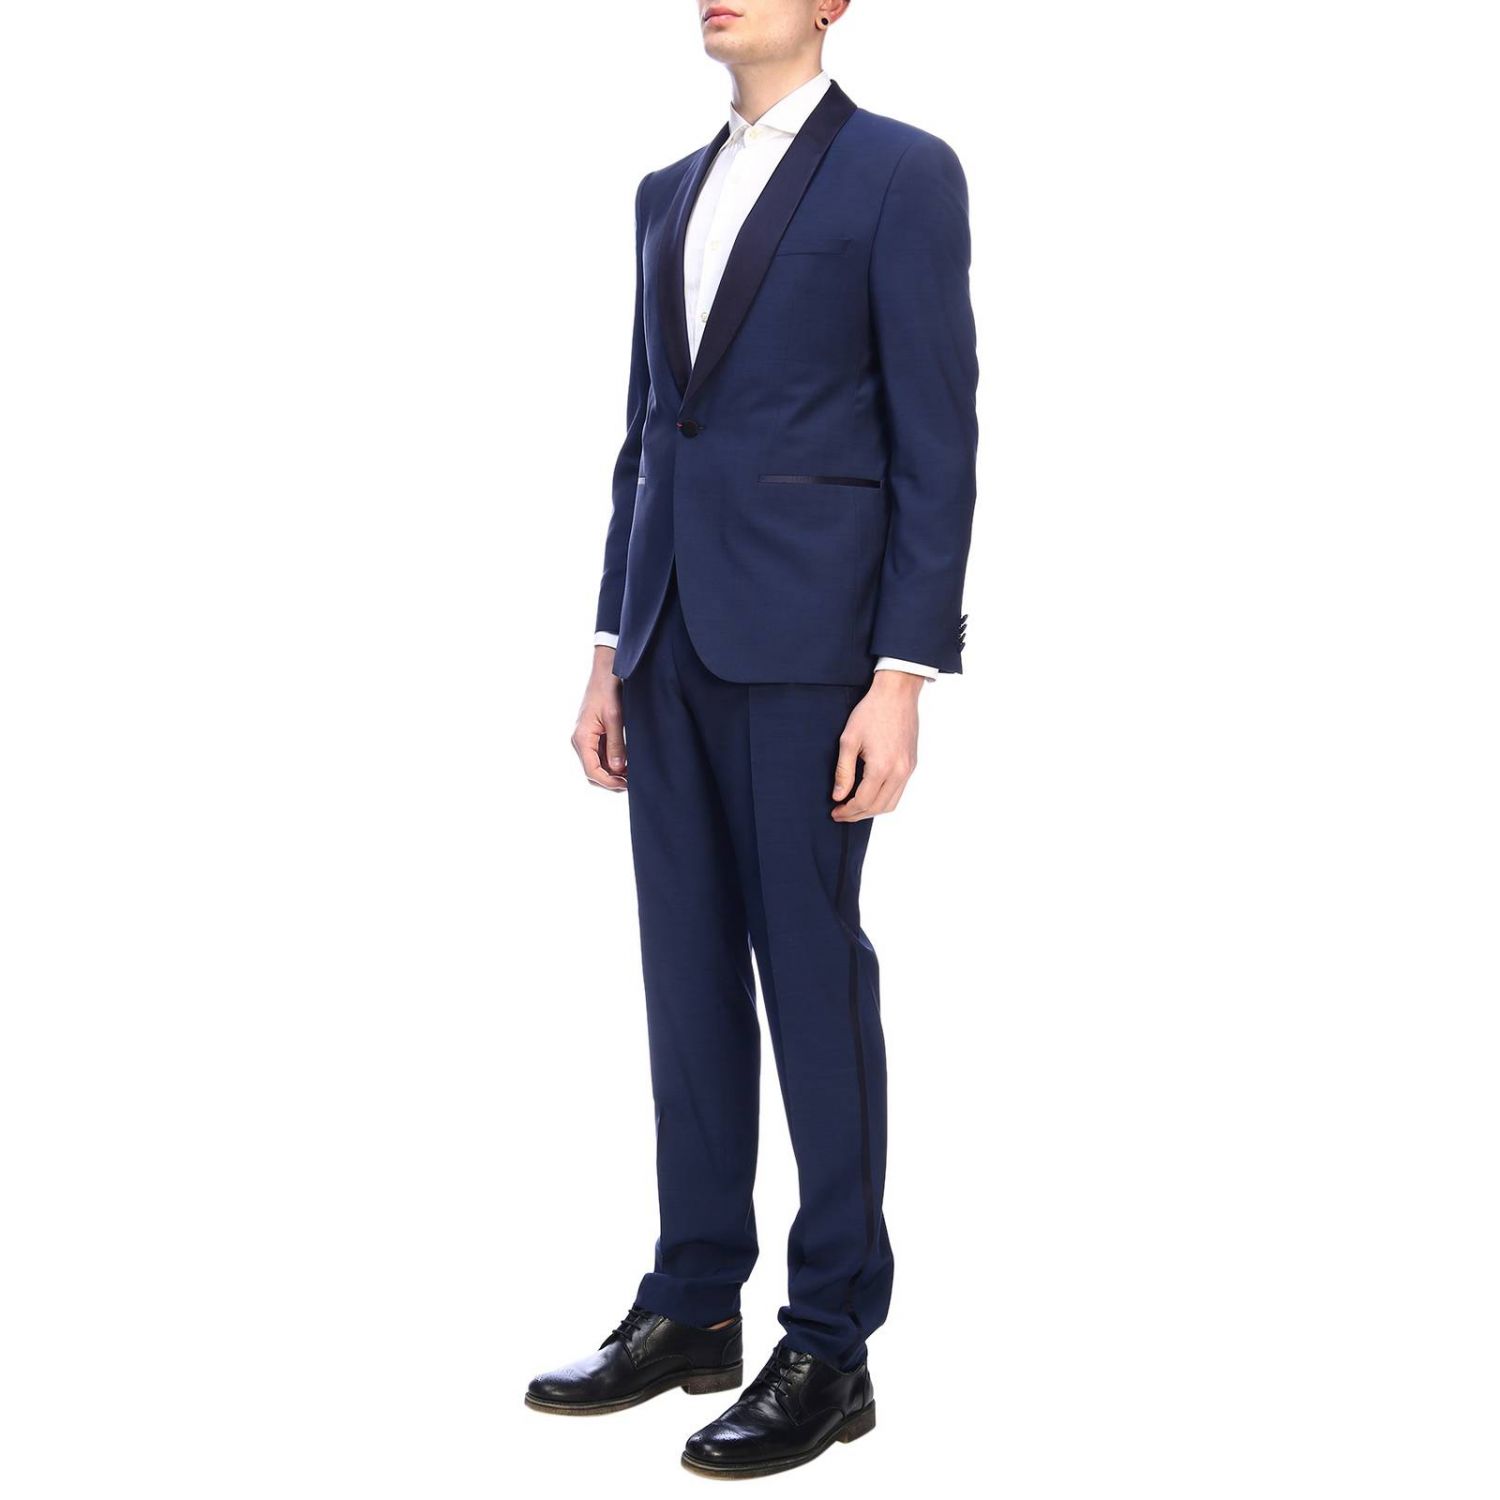 Hugo Boss Outlet: Suit men | Suit Hugo Boss Men Blue | Suit Hugo Boss  183E1017801 JEFFERY/SIMMONS Giglio EN